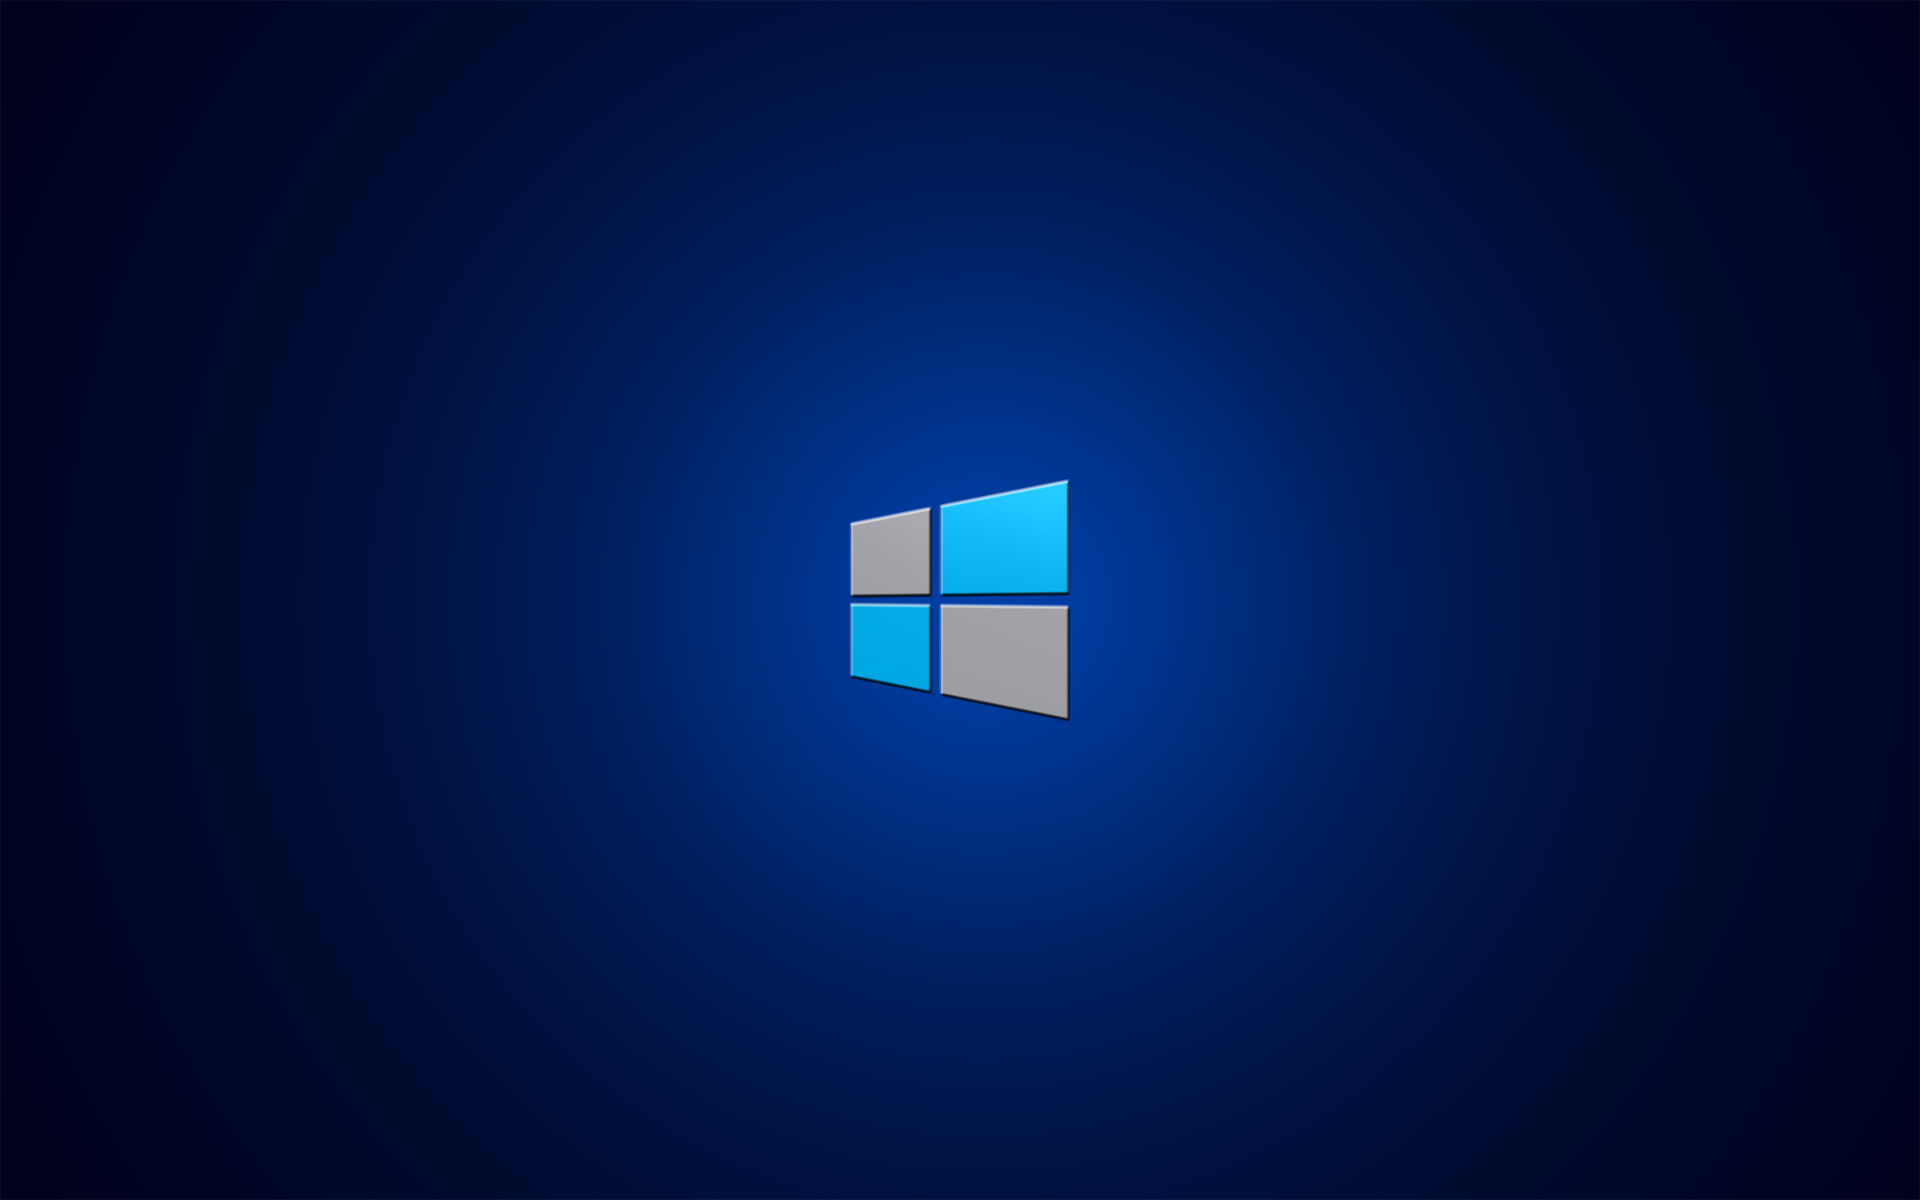 1920x1200 Windows 8 wallpaper: Credits: CianDesign. Windows_8_Wallpaper (1)